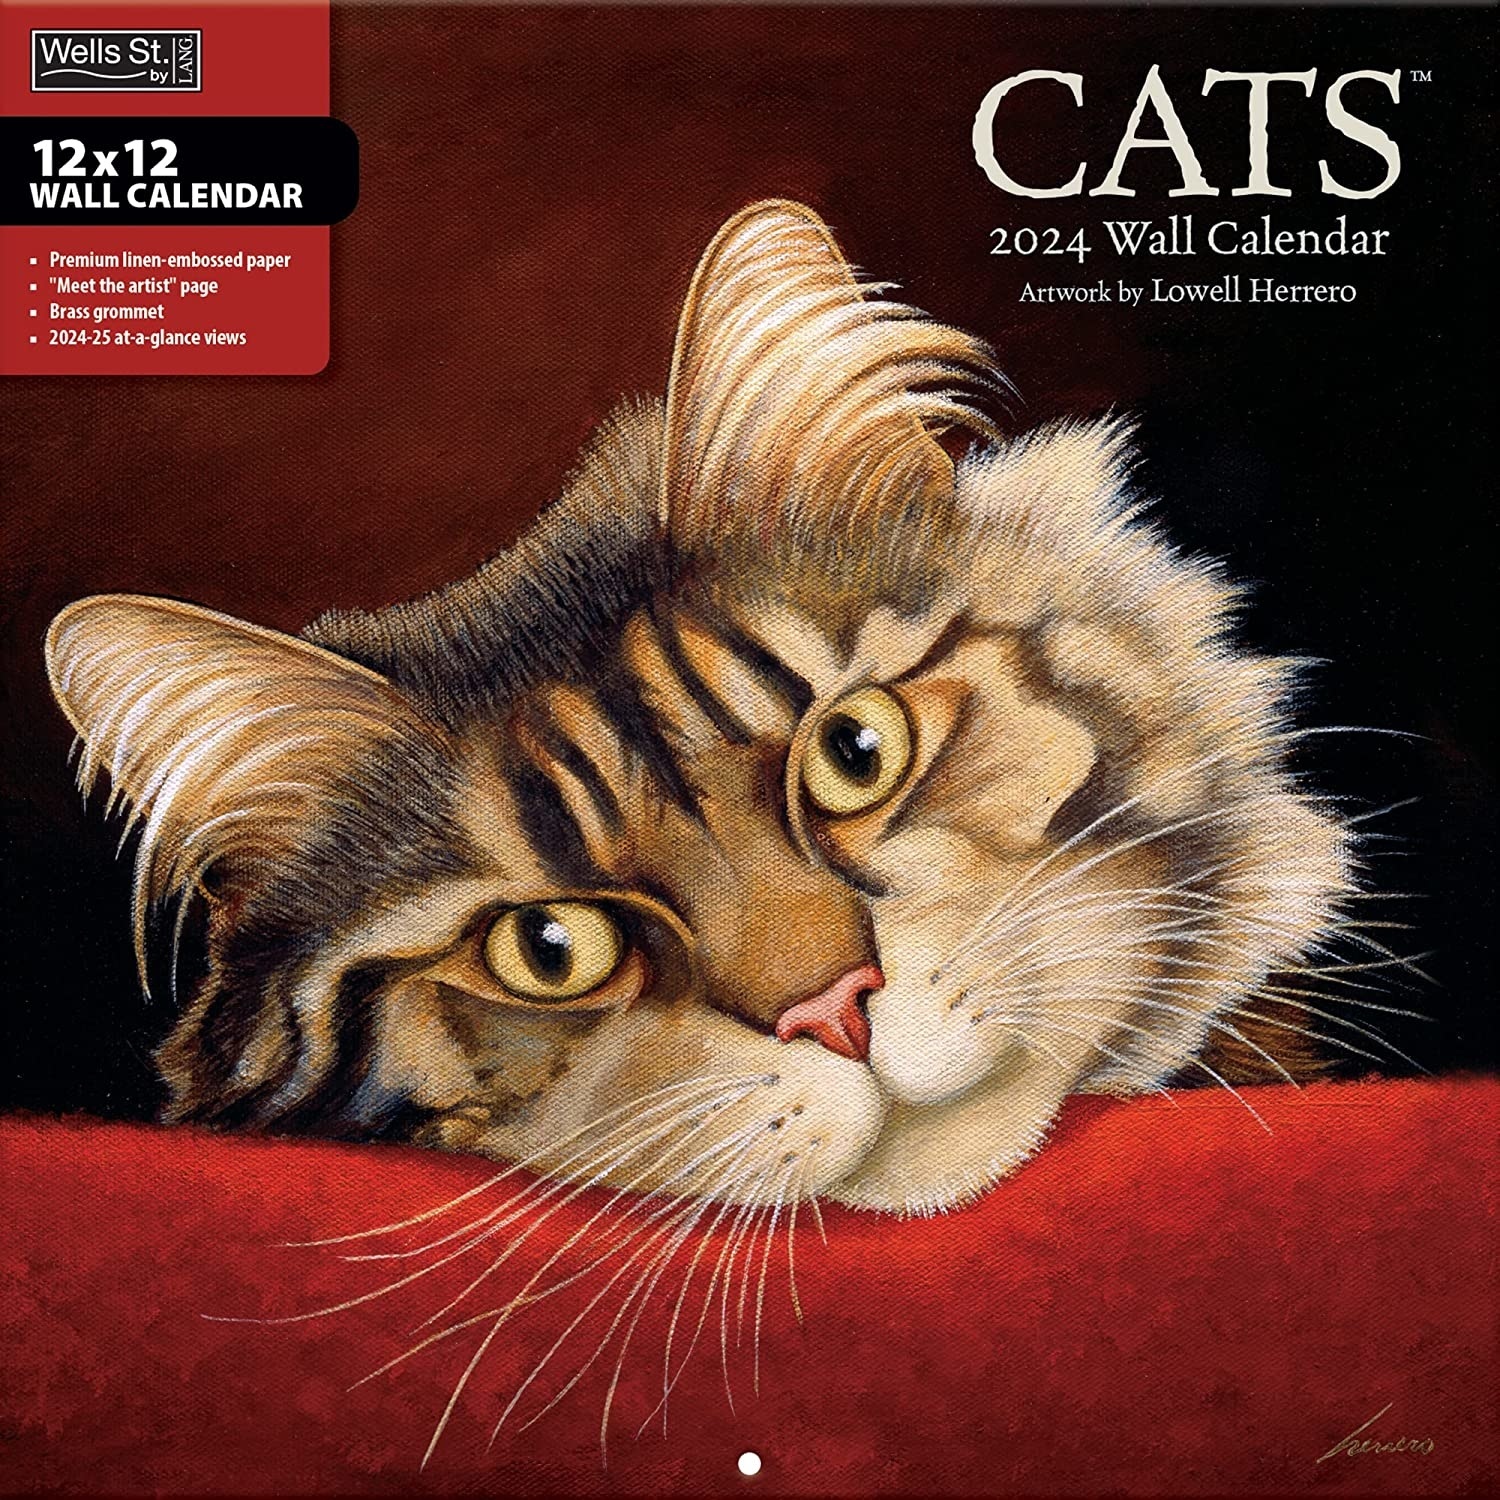 Wells st. by Lang Calendario dei gatti 2024 